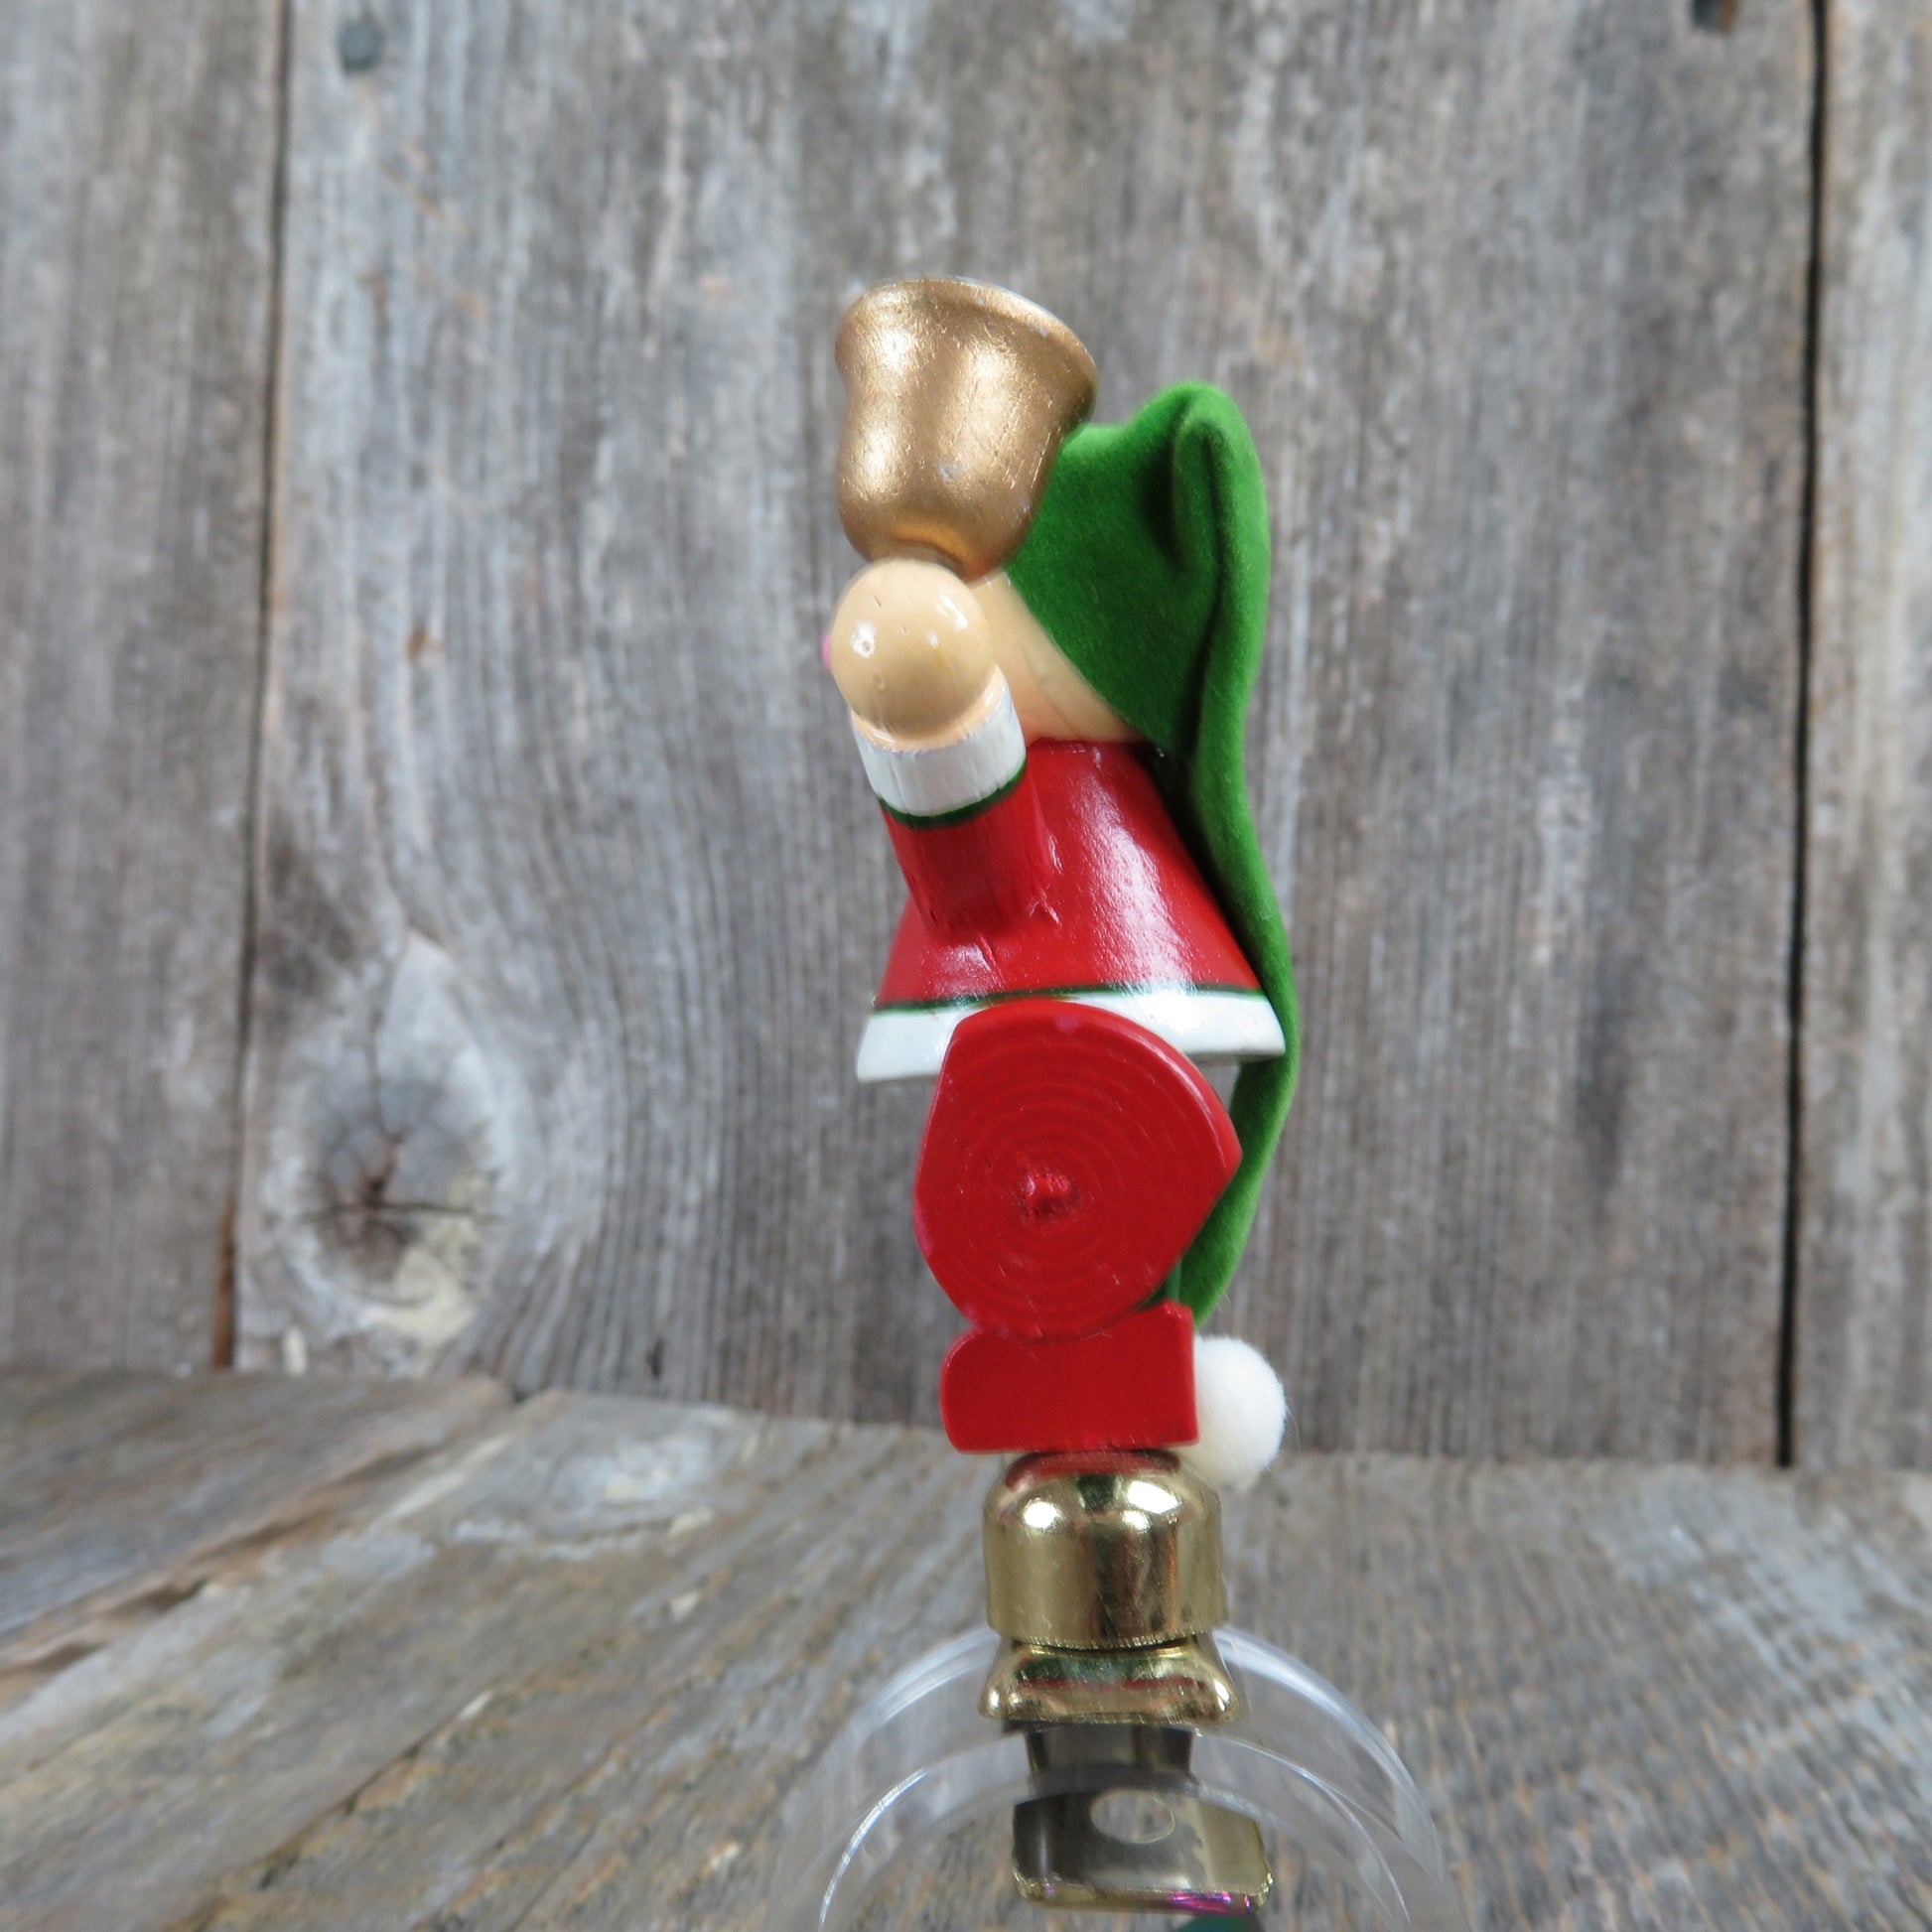 Vintage Jester Elf Bell Ringer Wooden Ornament Dakin Clip Christmas Wood 1985 - At Grandma's Table